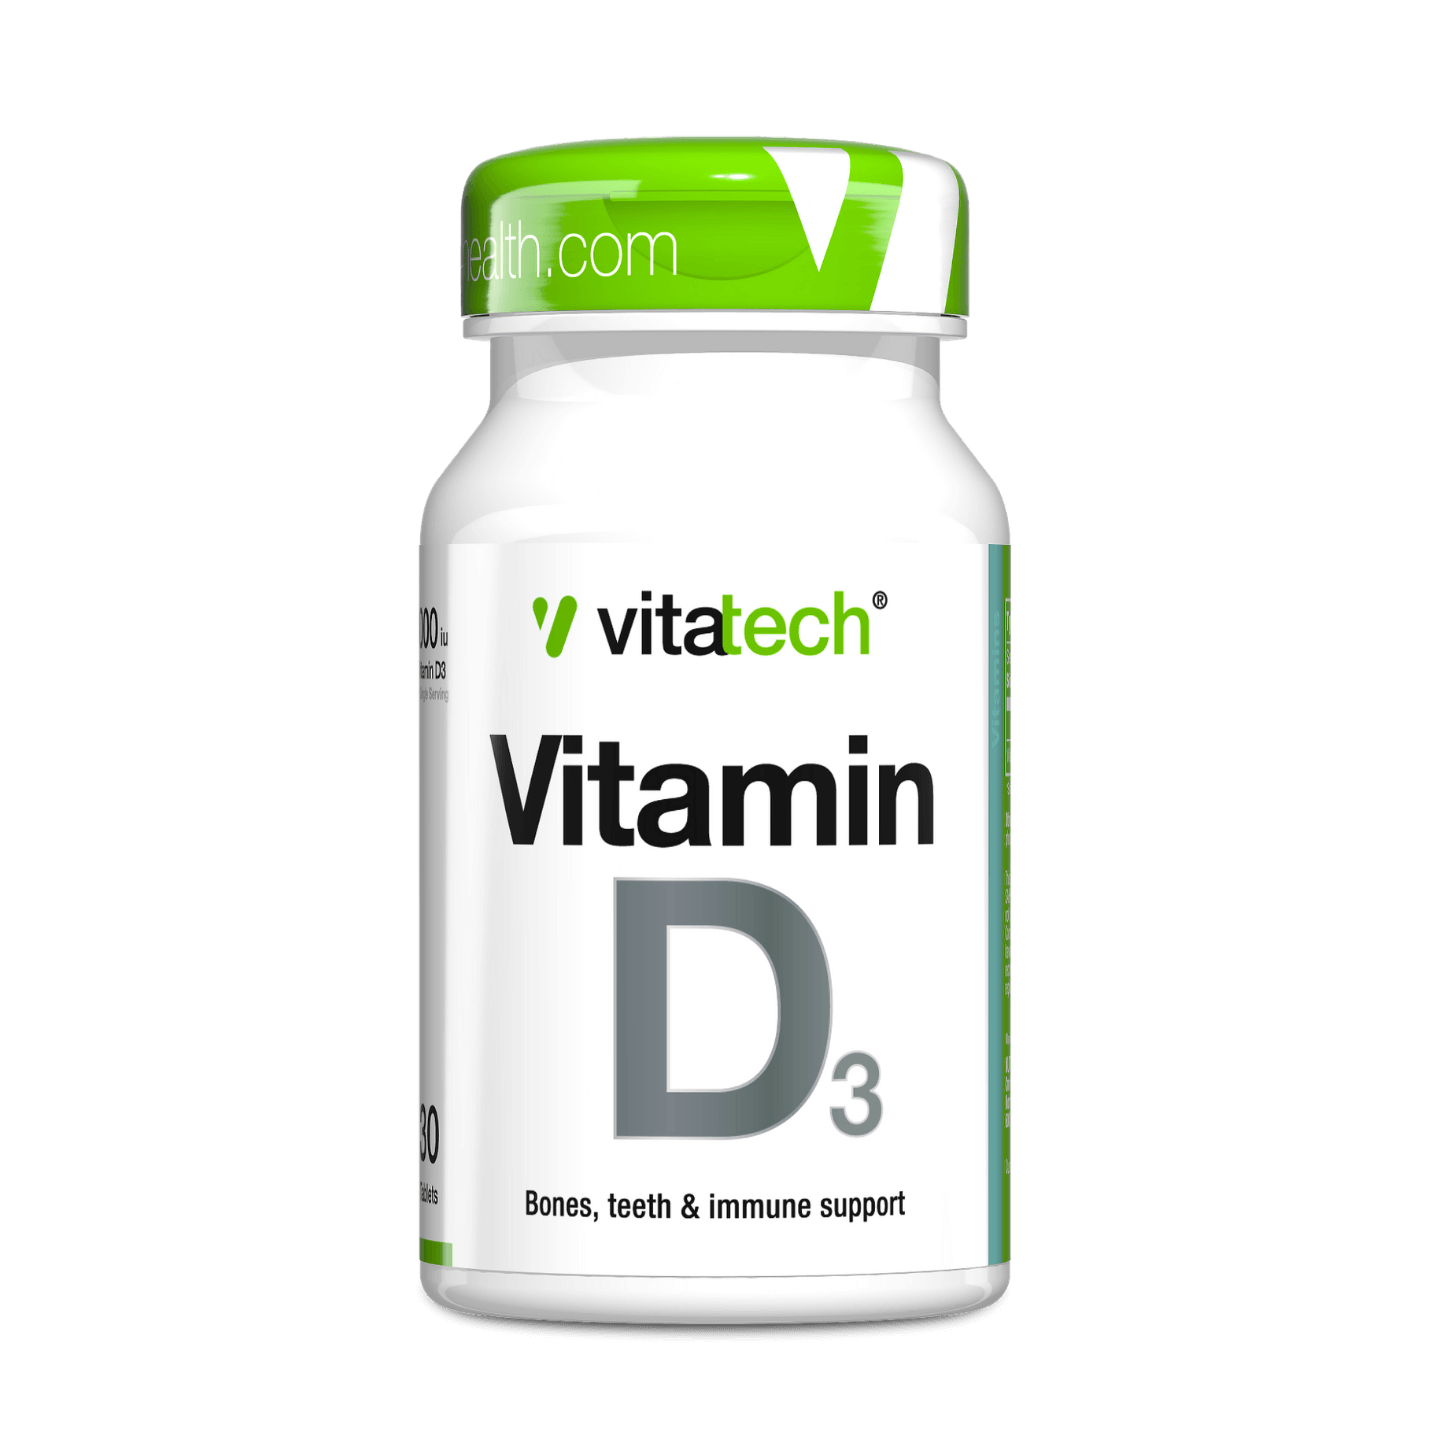 vitatech vitamin d3